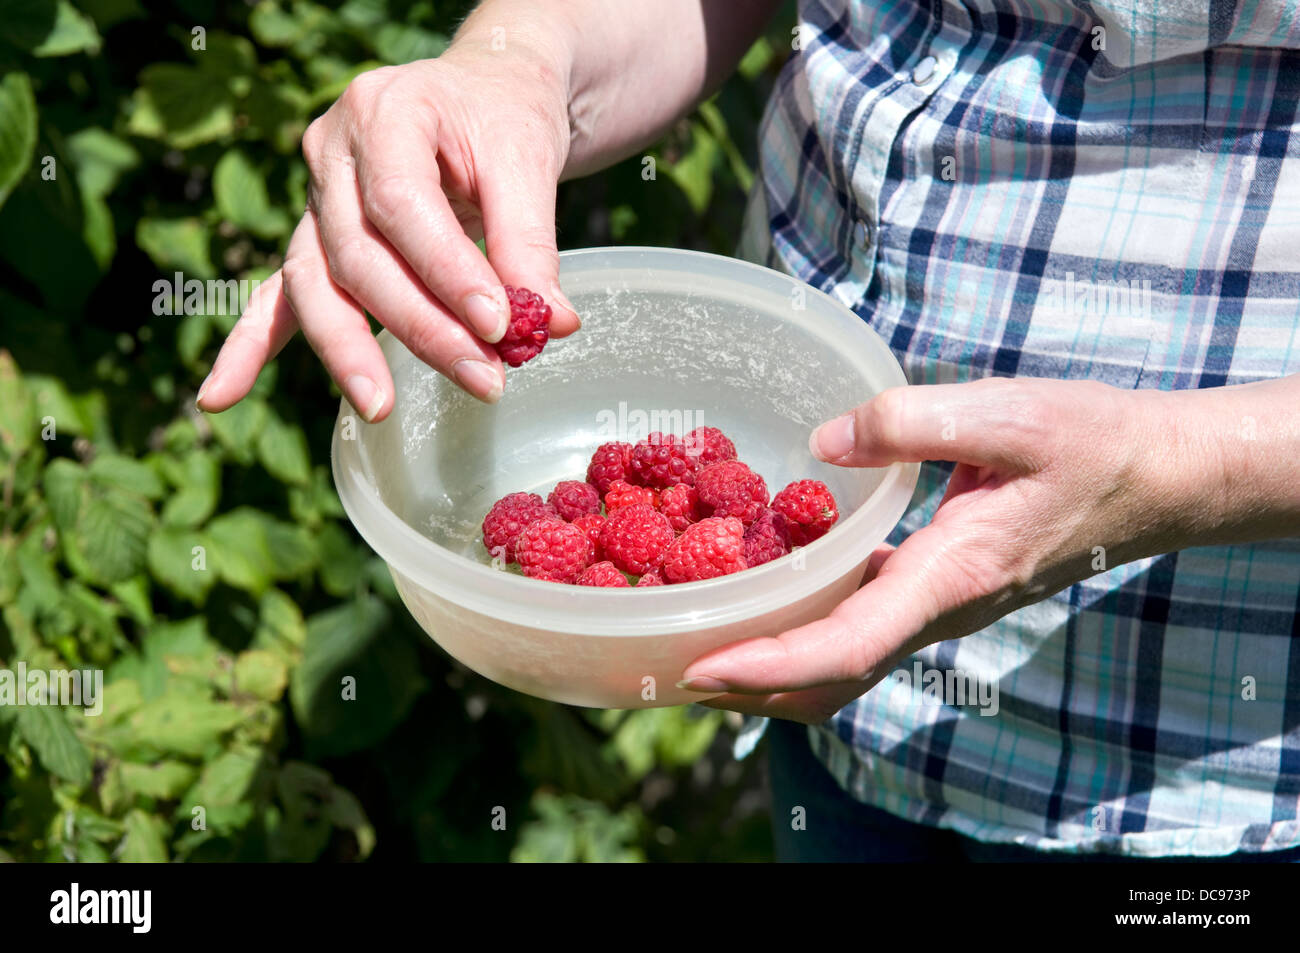 Caucasian woman picking home grown raspberries in garden, taken in Bristol, UK Stock Photo